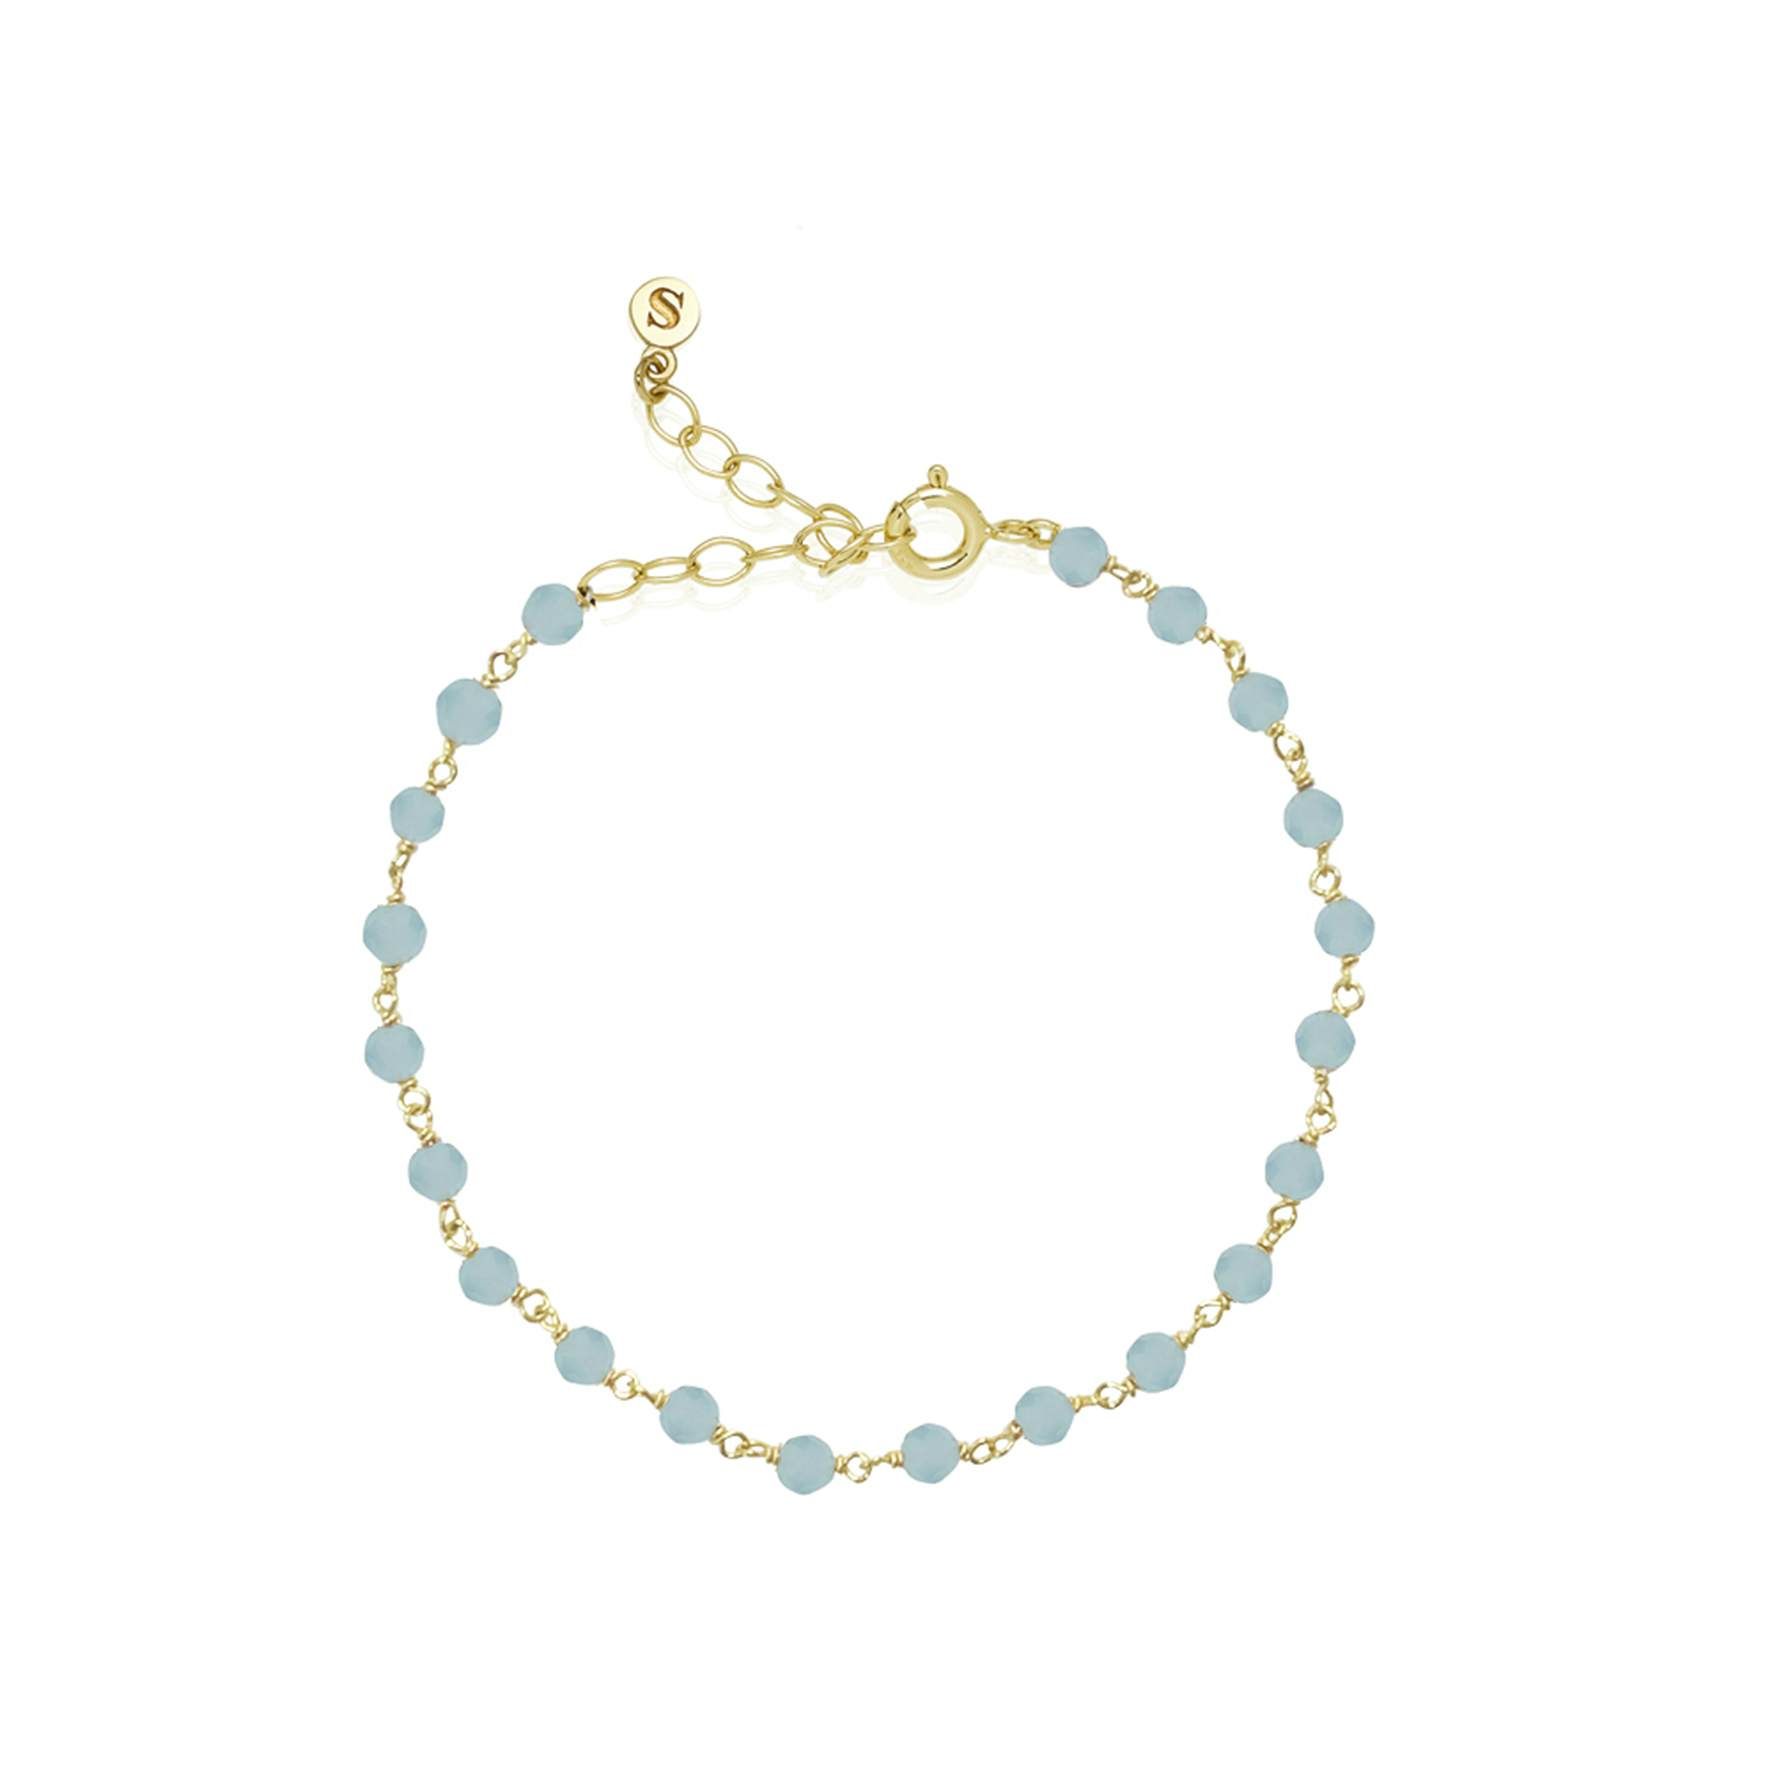 Boheme Blue Bracelet von Sistie in Vergoldet-Silber Sterling 925